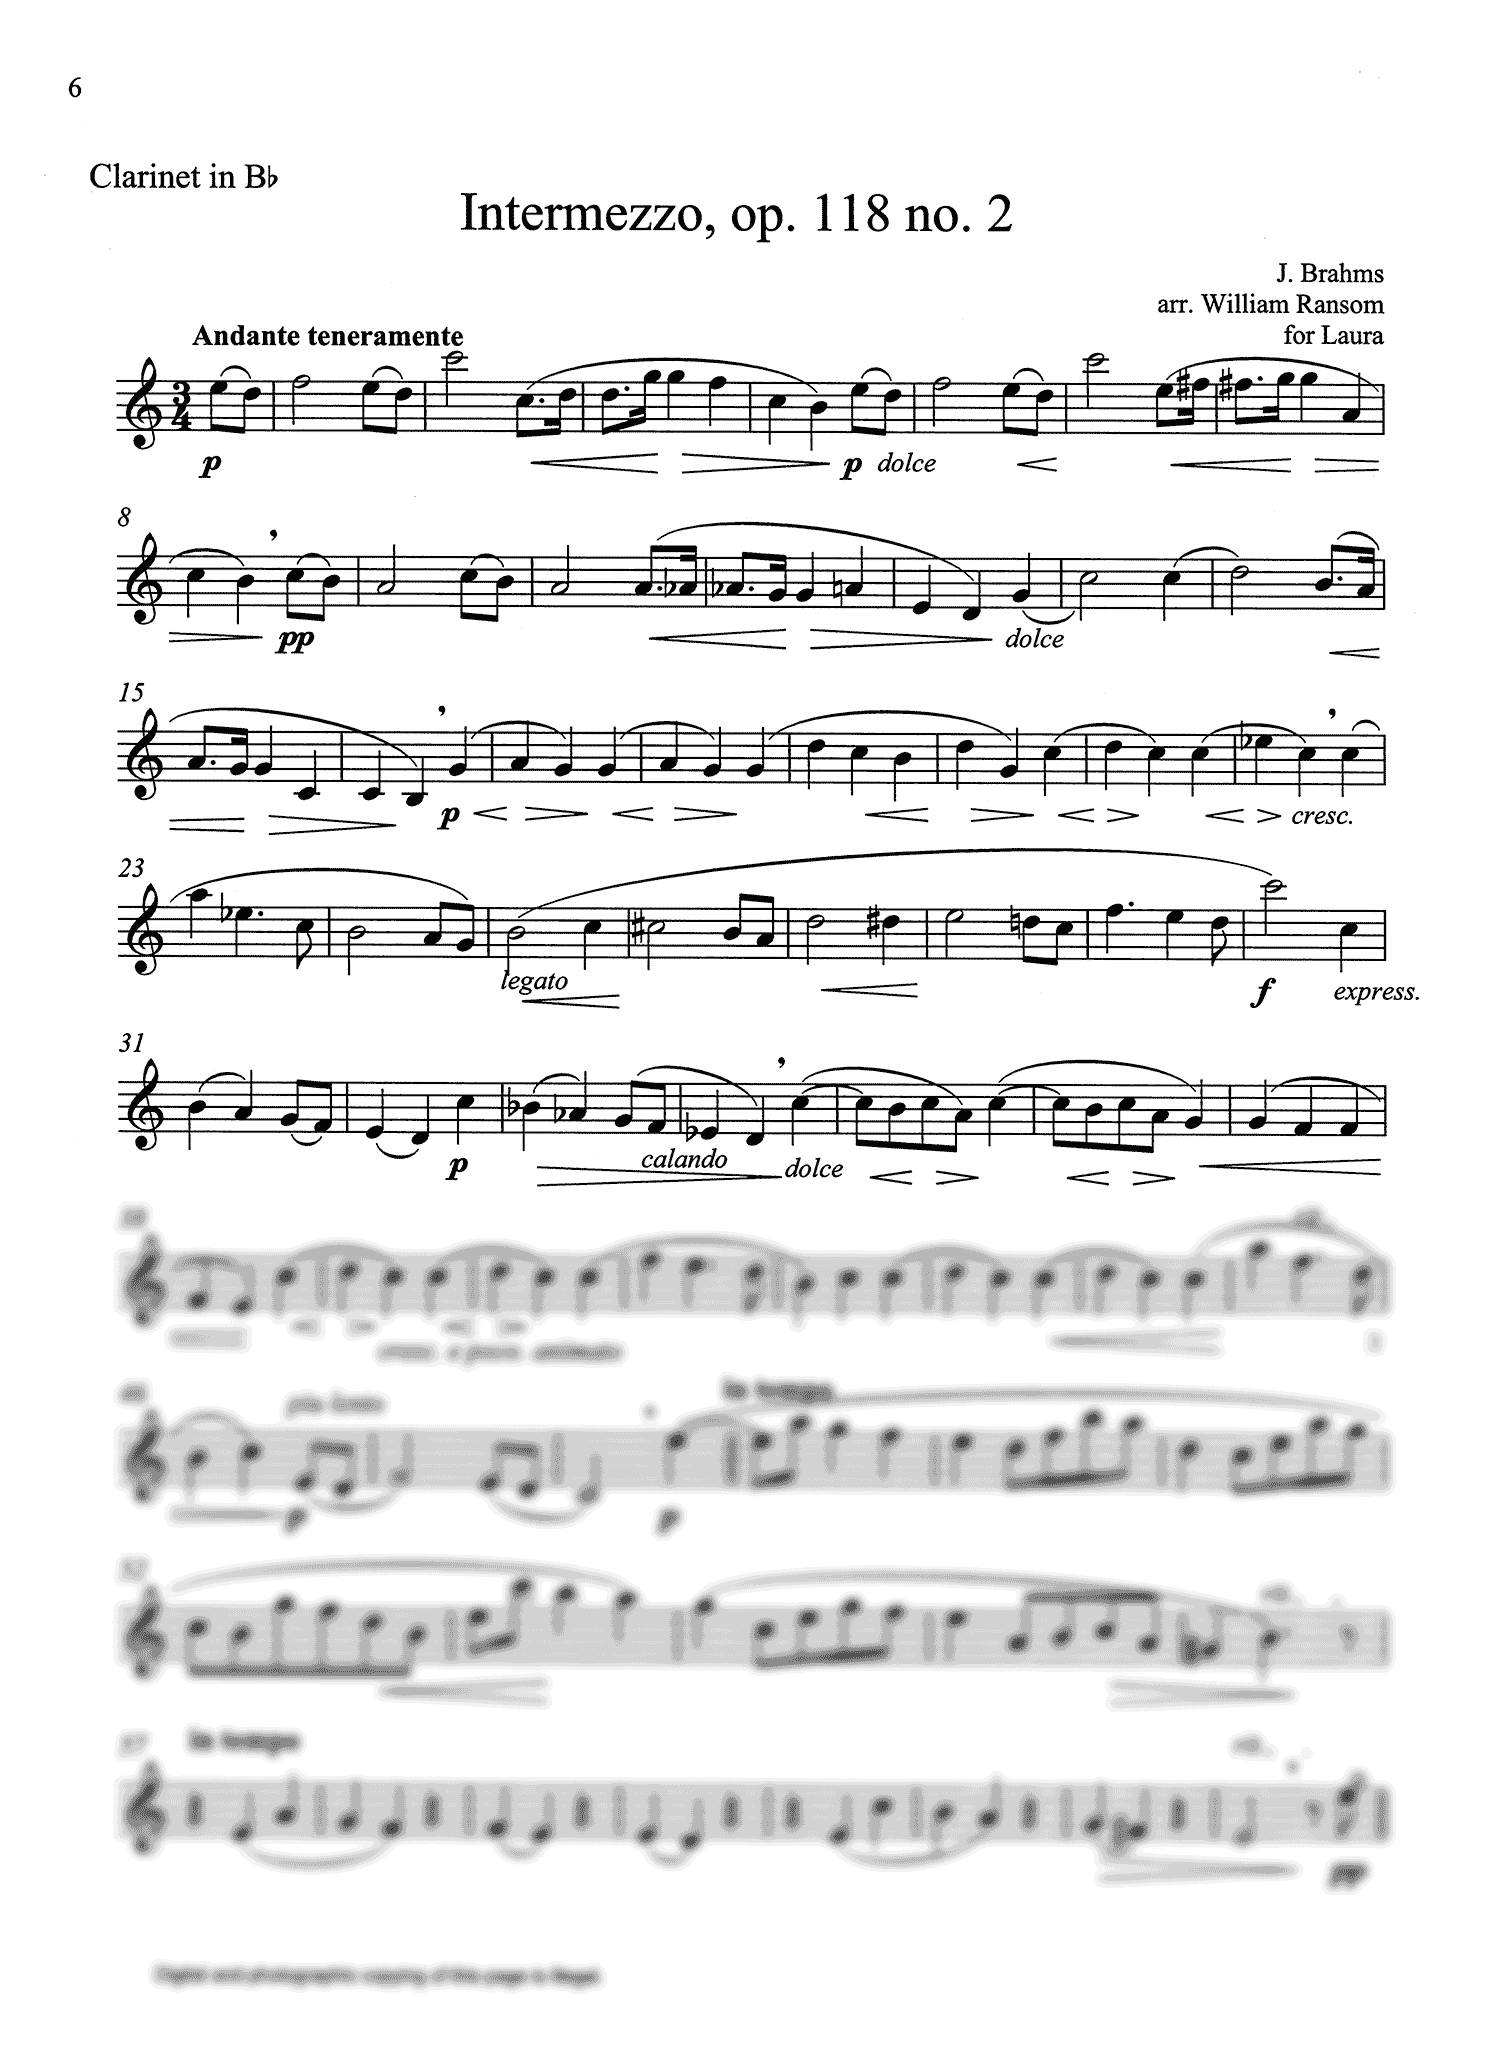 Intermezzo, Op. 118 No. 2 Concert B-Flat, B-Flat Clarinet part 